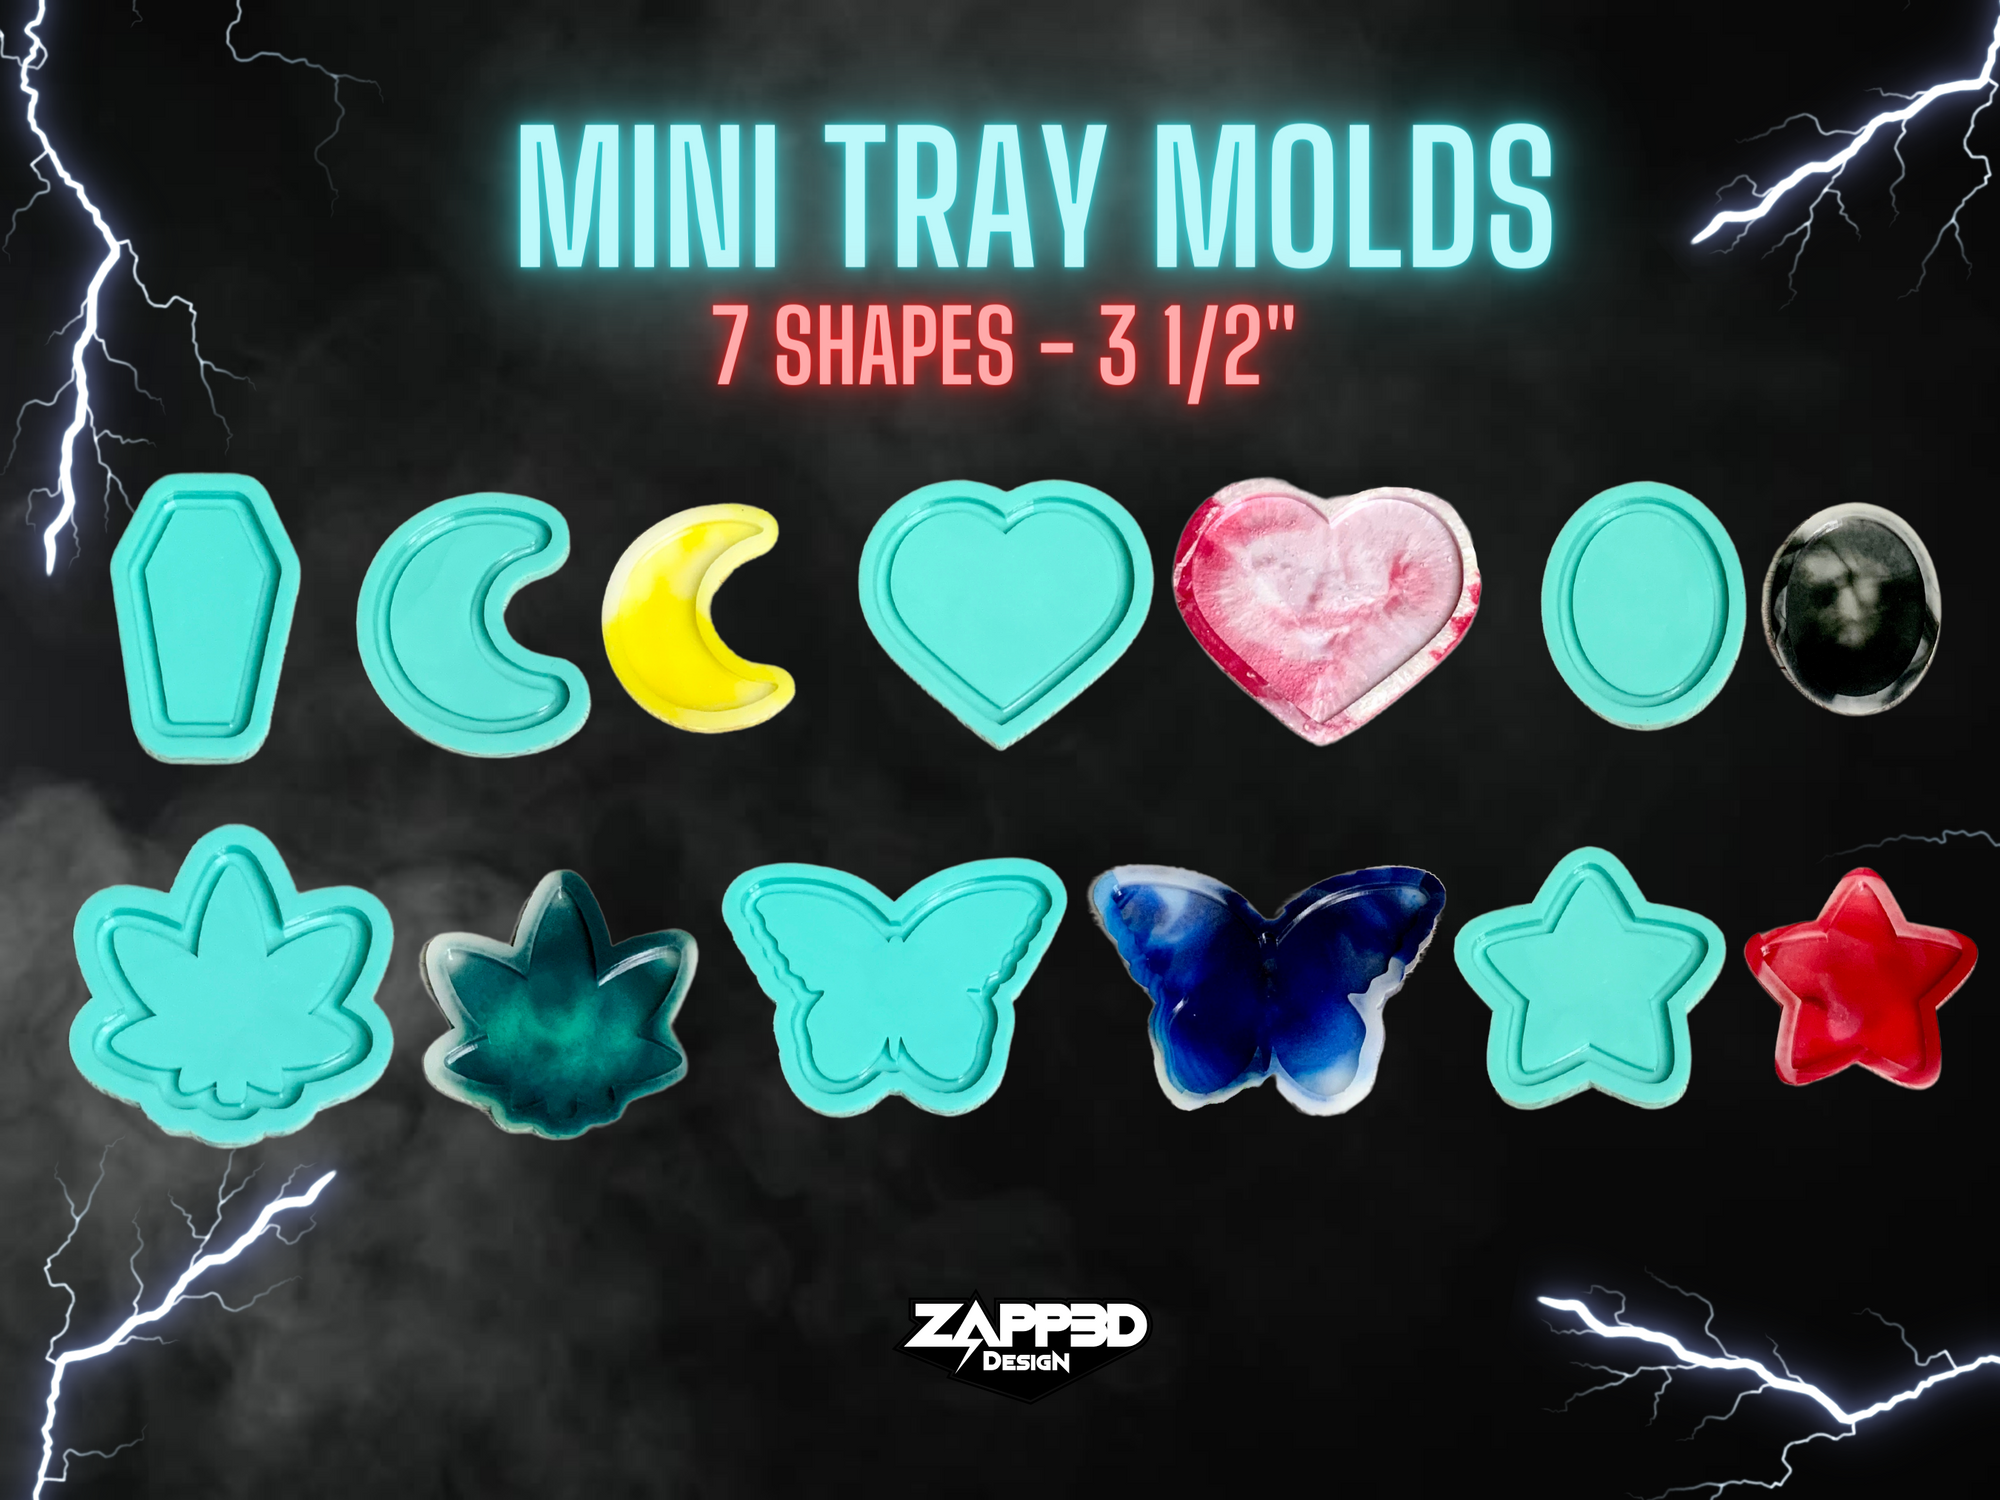 Mini Tray Molds | 7 Shapes | Tray Mold, Heart Mold, Coffin Mold, Moon Mold, Star Mold, Butterfly Mold, Oval Mold, Small Molds, Mini Molds